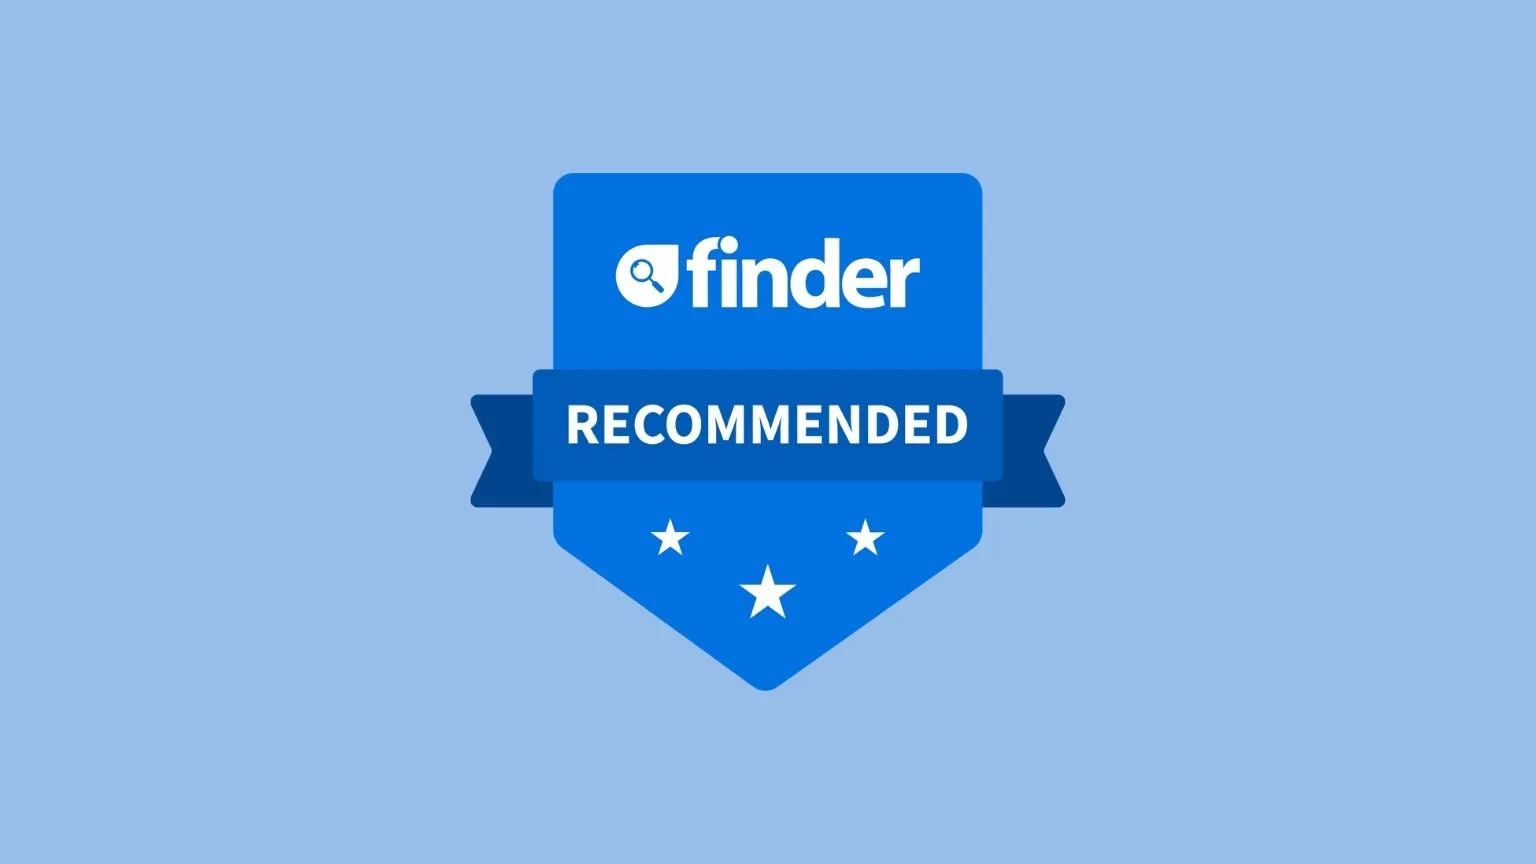 Finder recommended badge